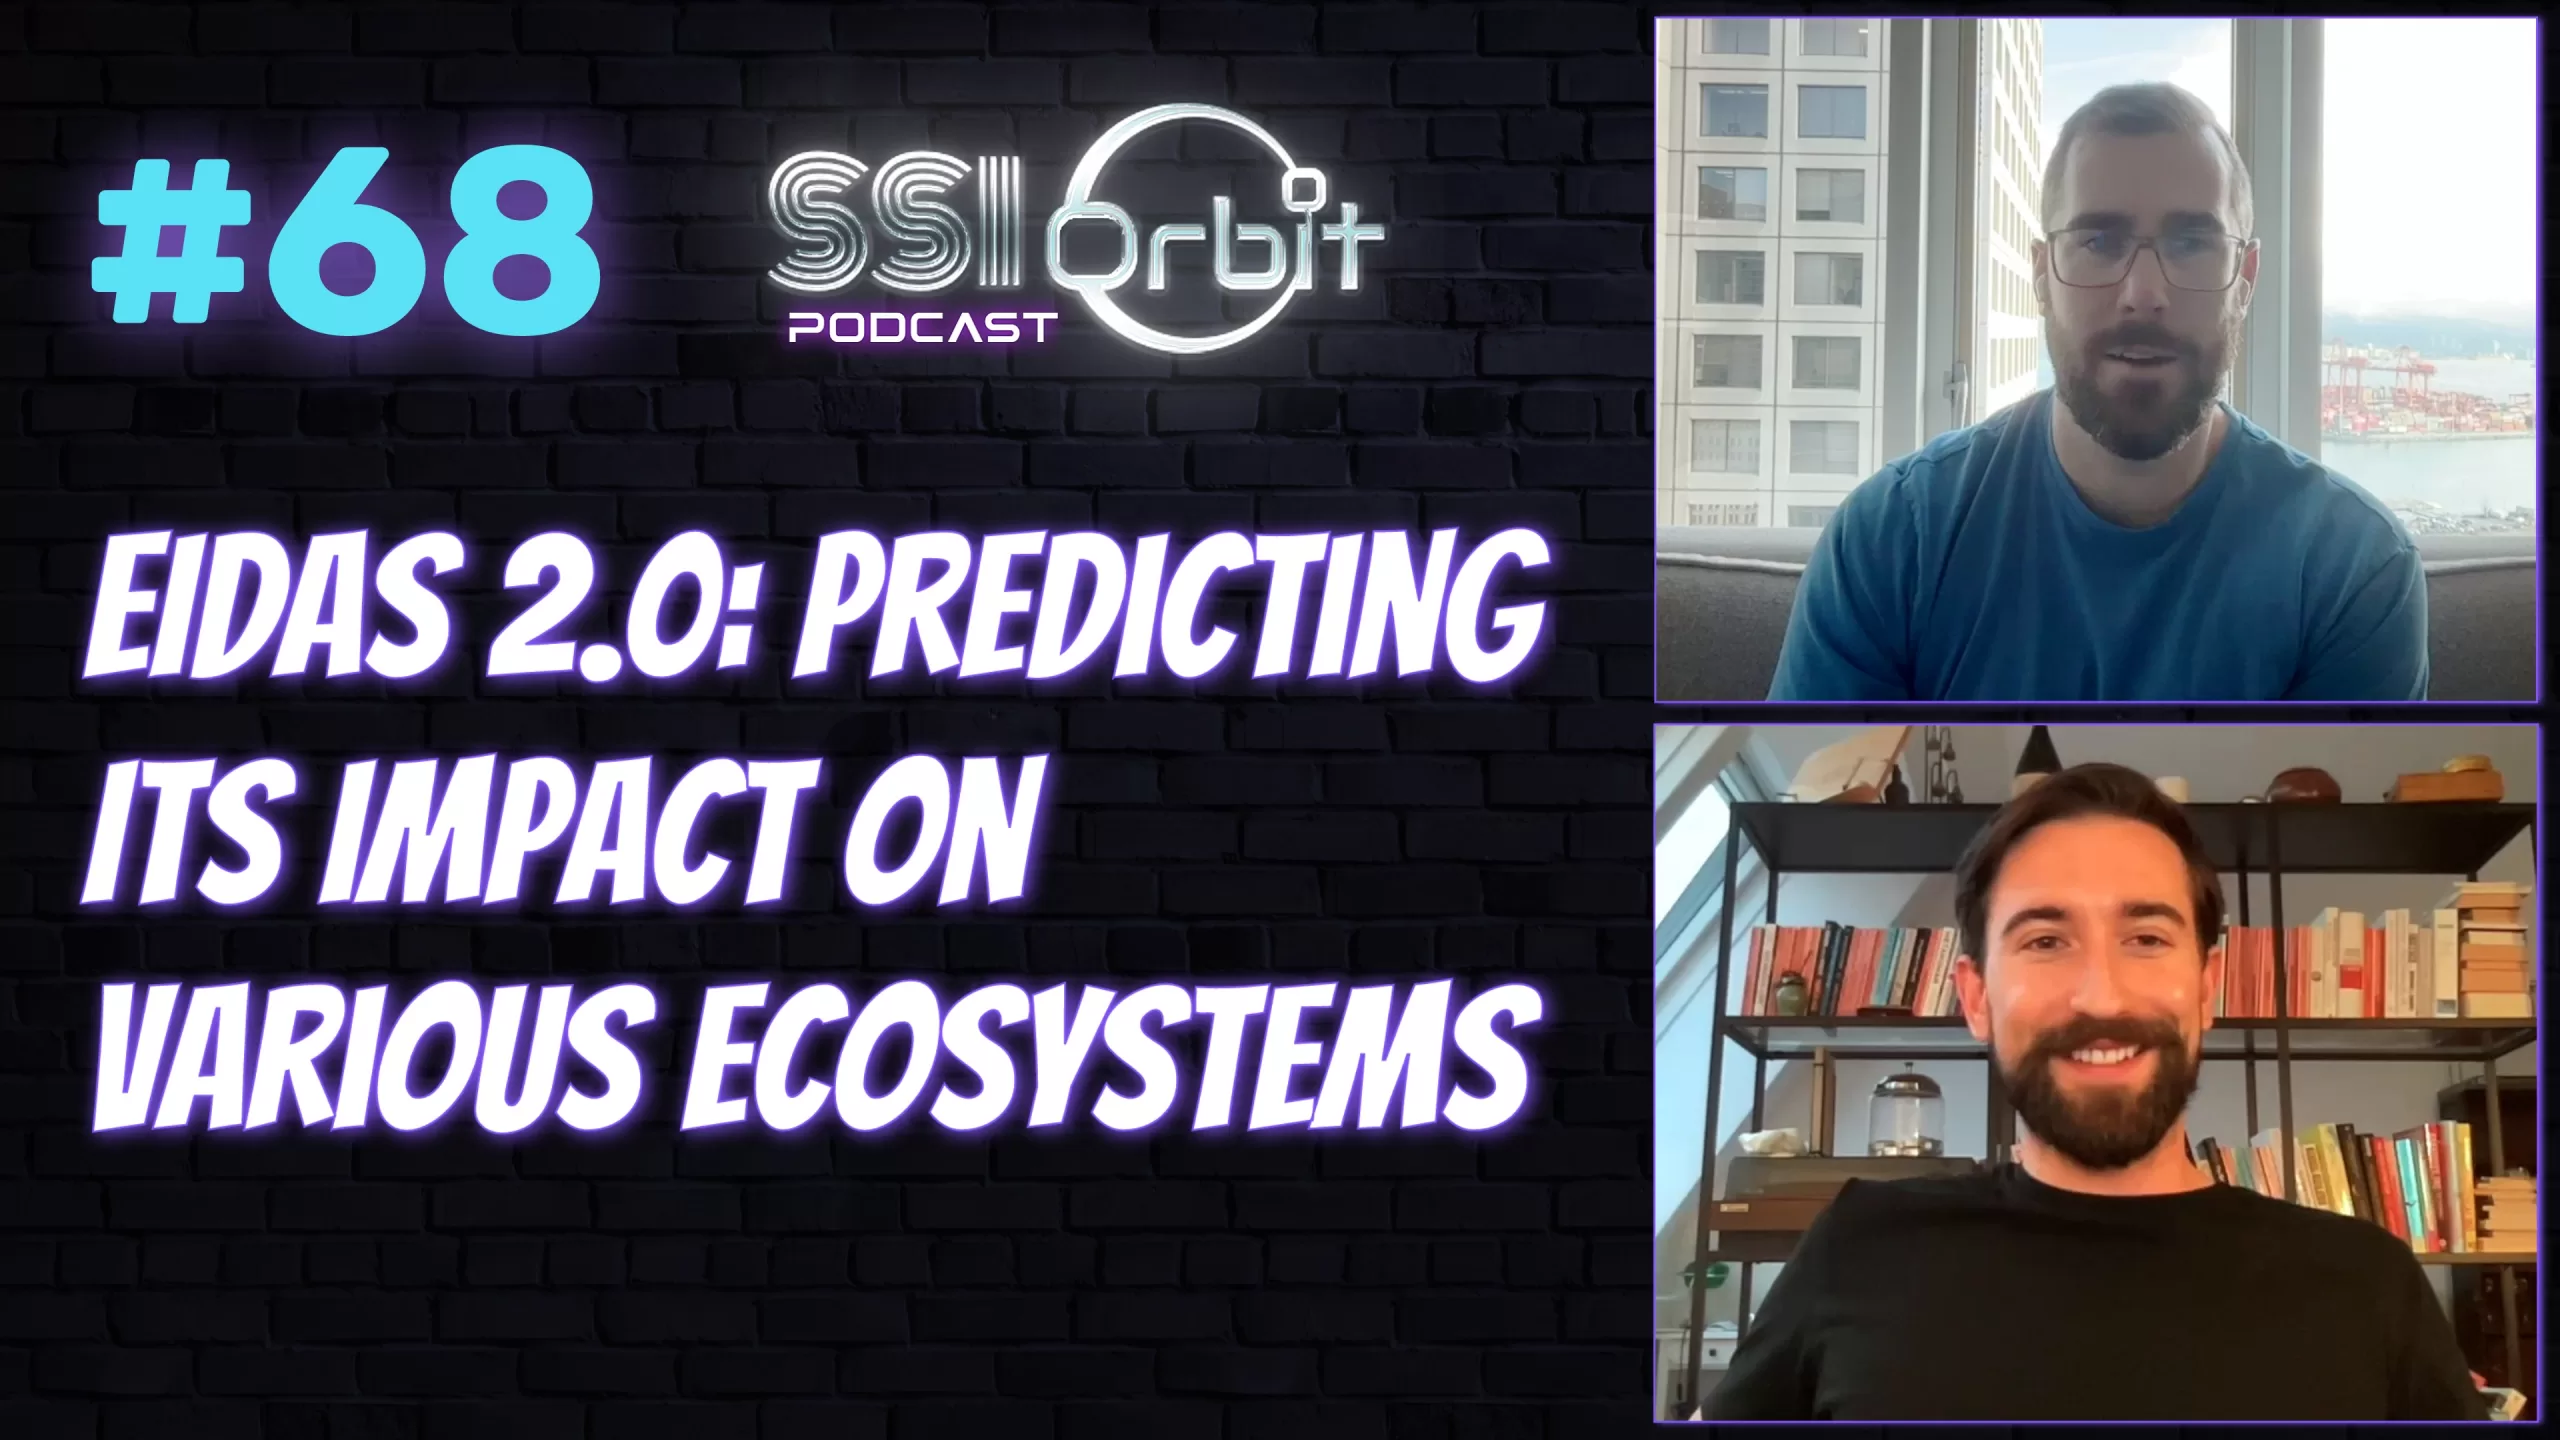 eIDAS 2.0: Predicting Its Impact on Various Ecosystems (with Dominik Beron)